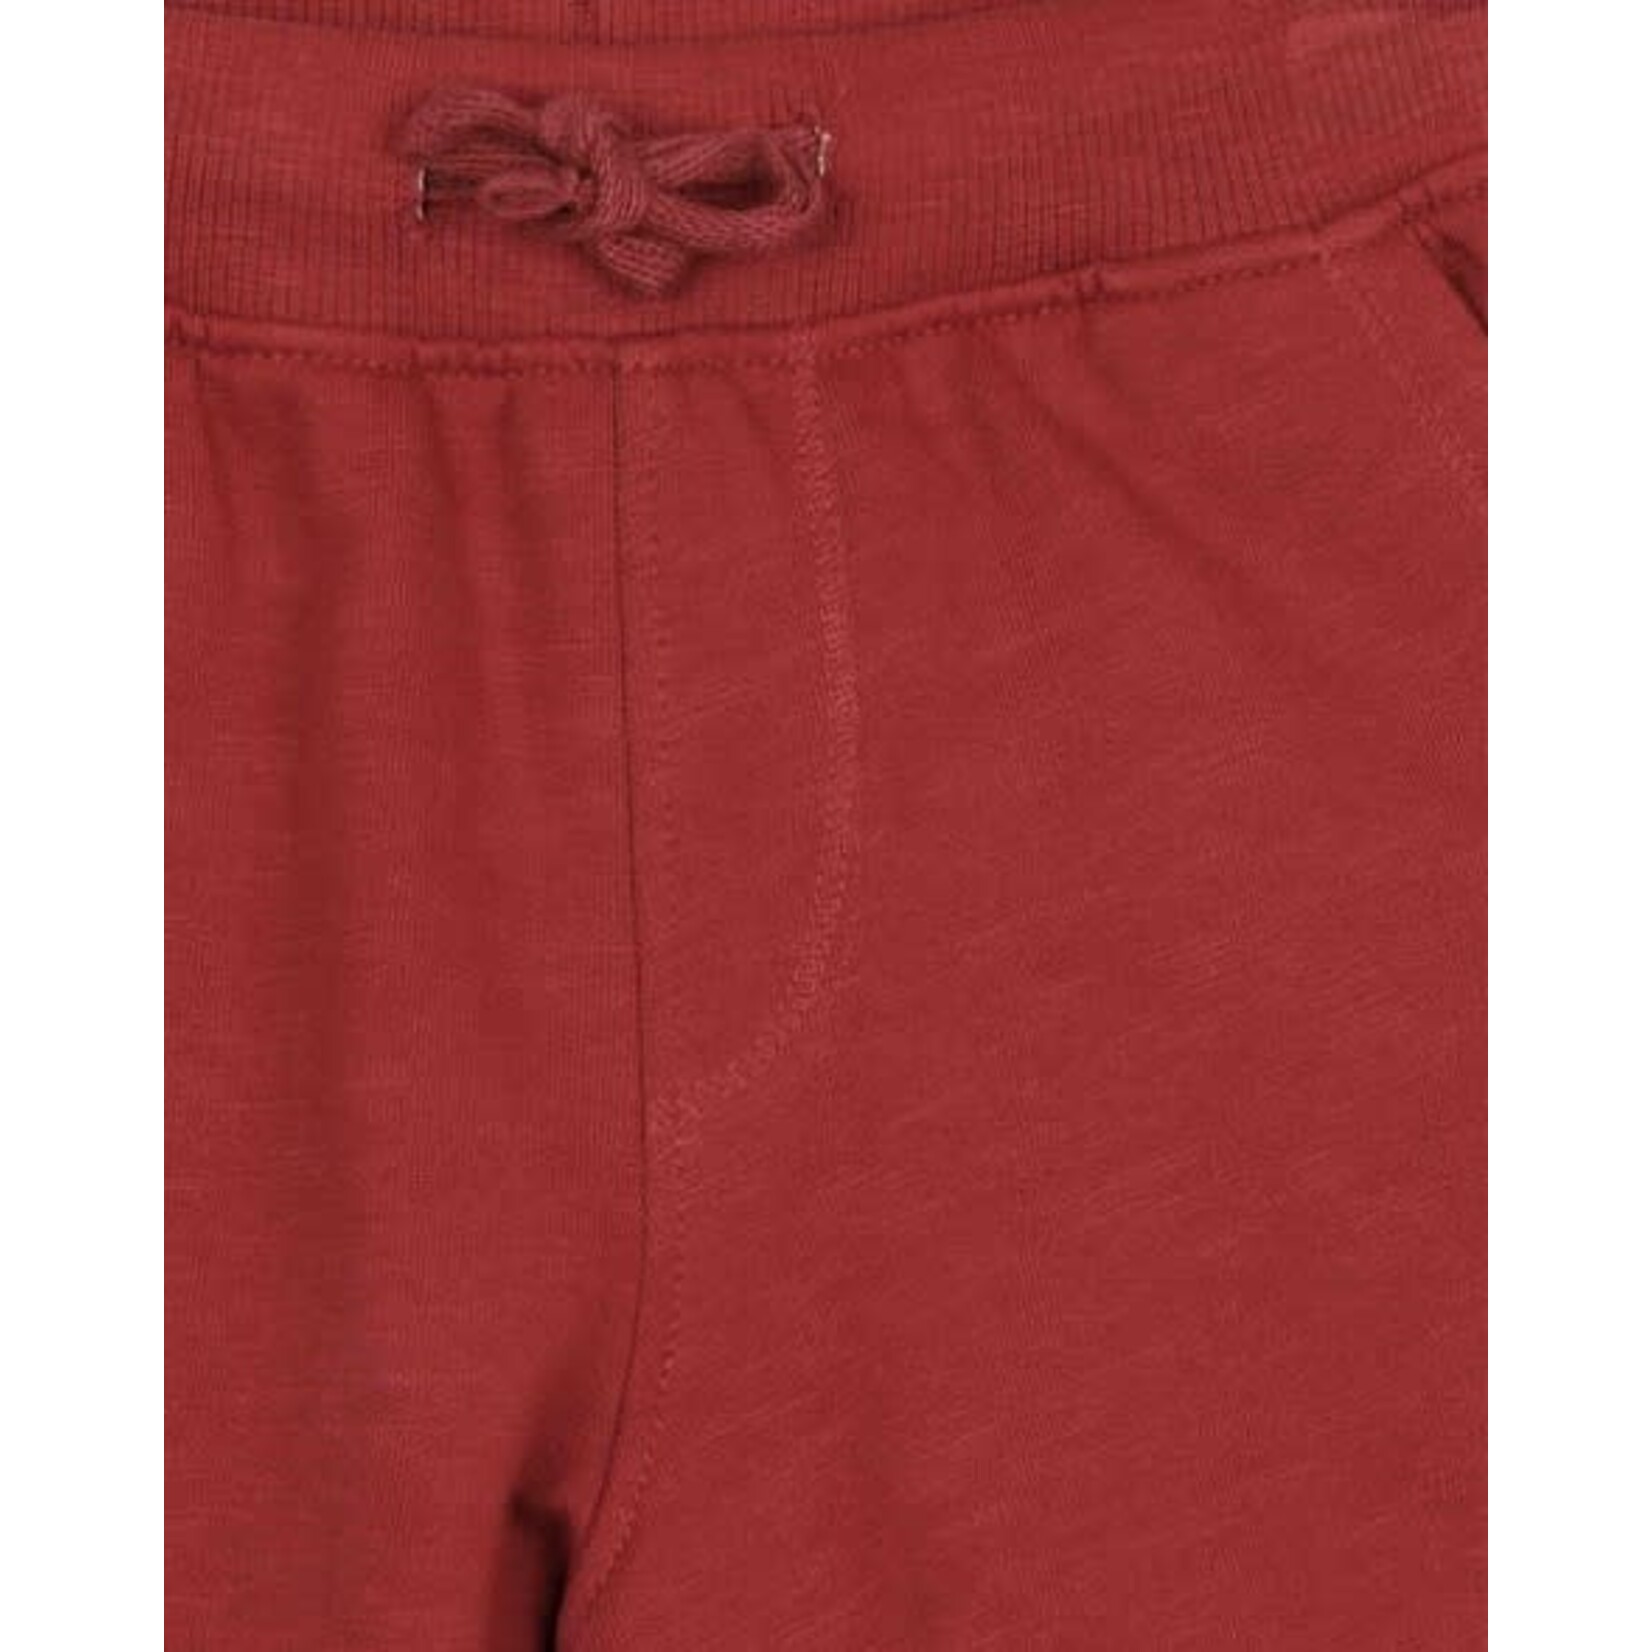 Losan LOSAN - Burgundy jersey cotton shorts 'Roar'